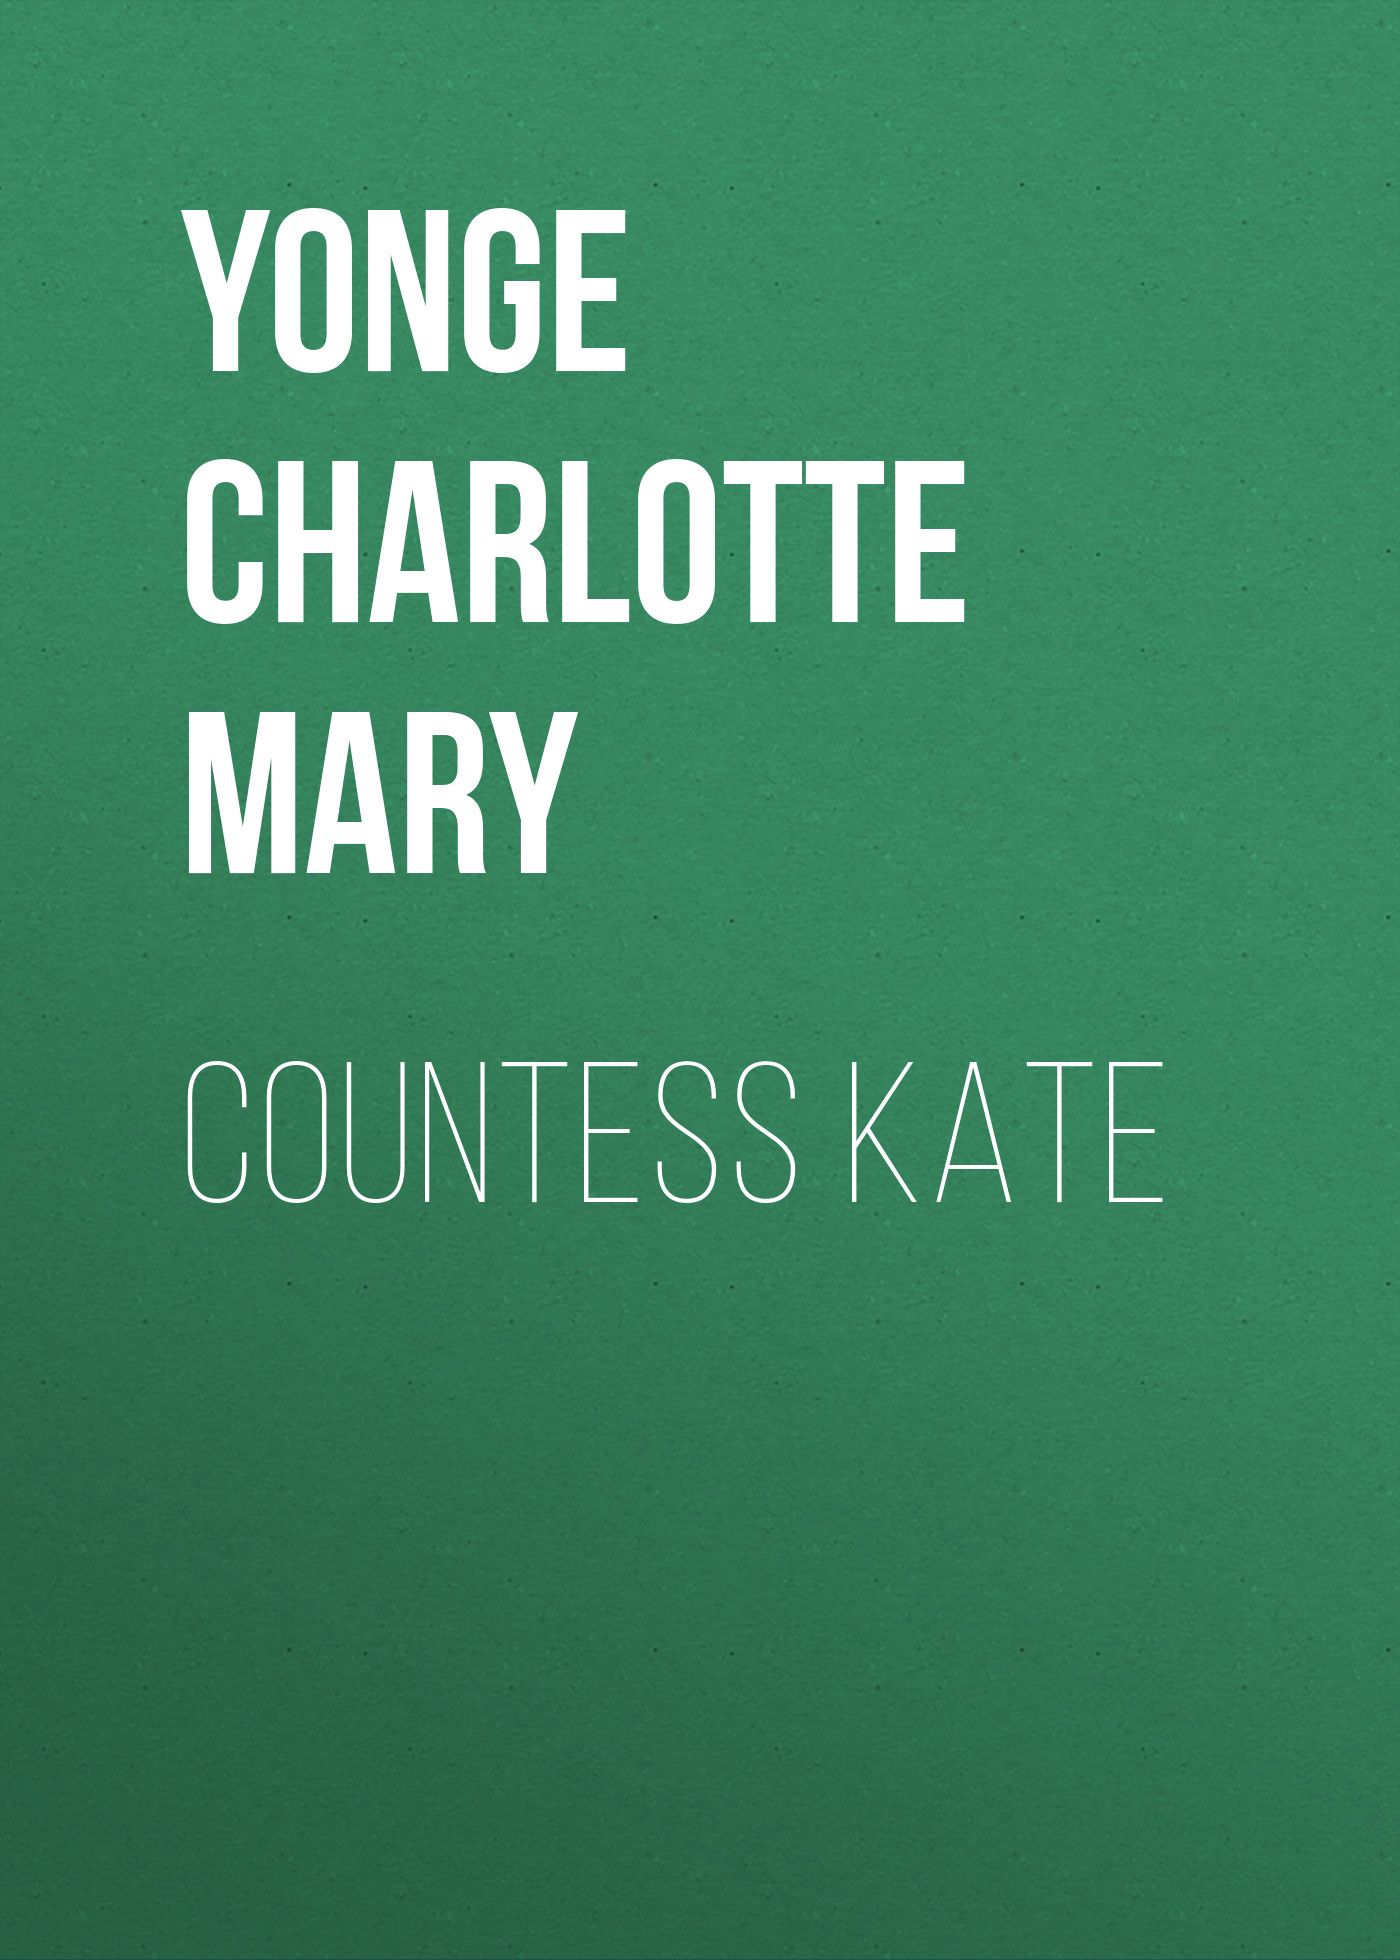 Yonge Charlotte Mary Countess Kate